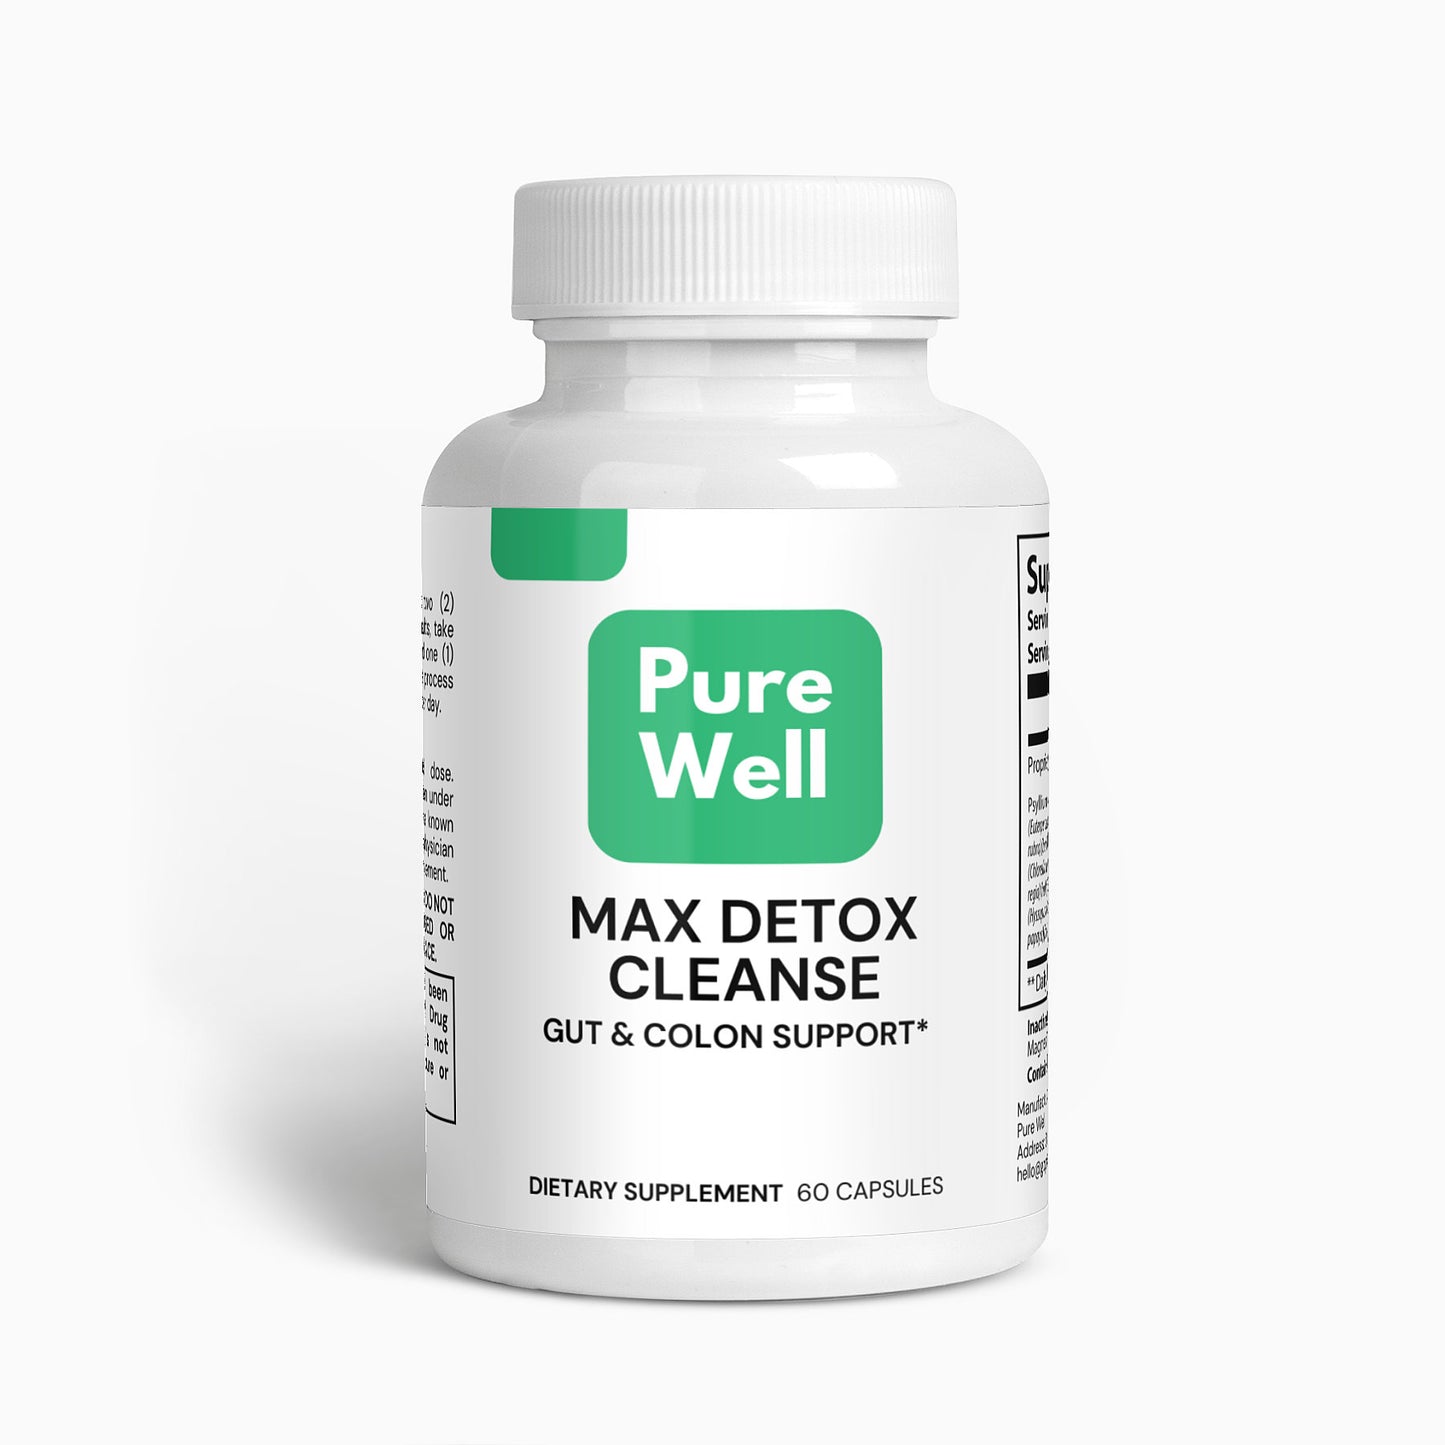 Max Detox Cleanse